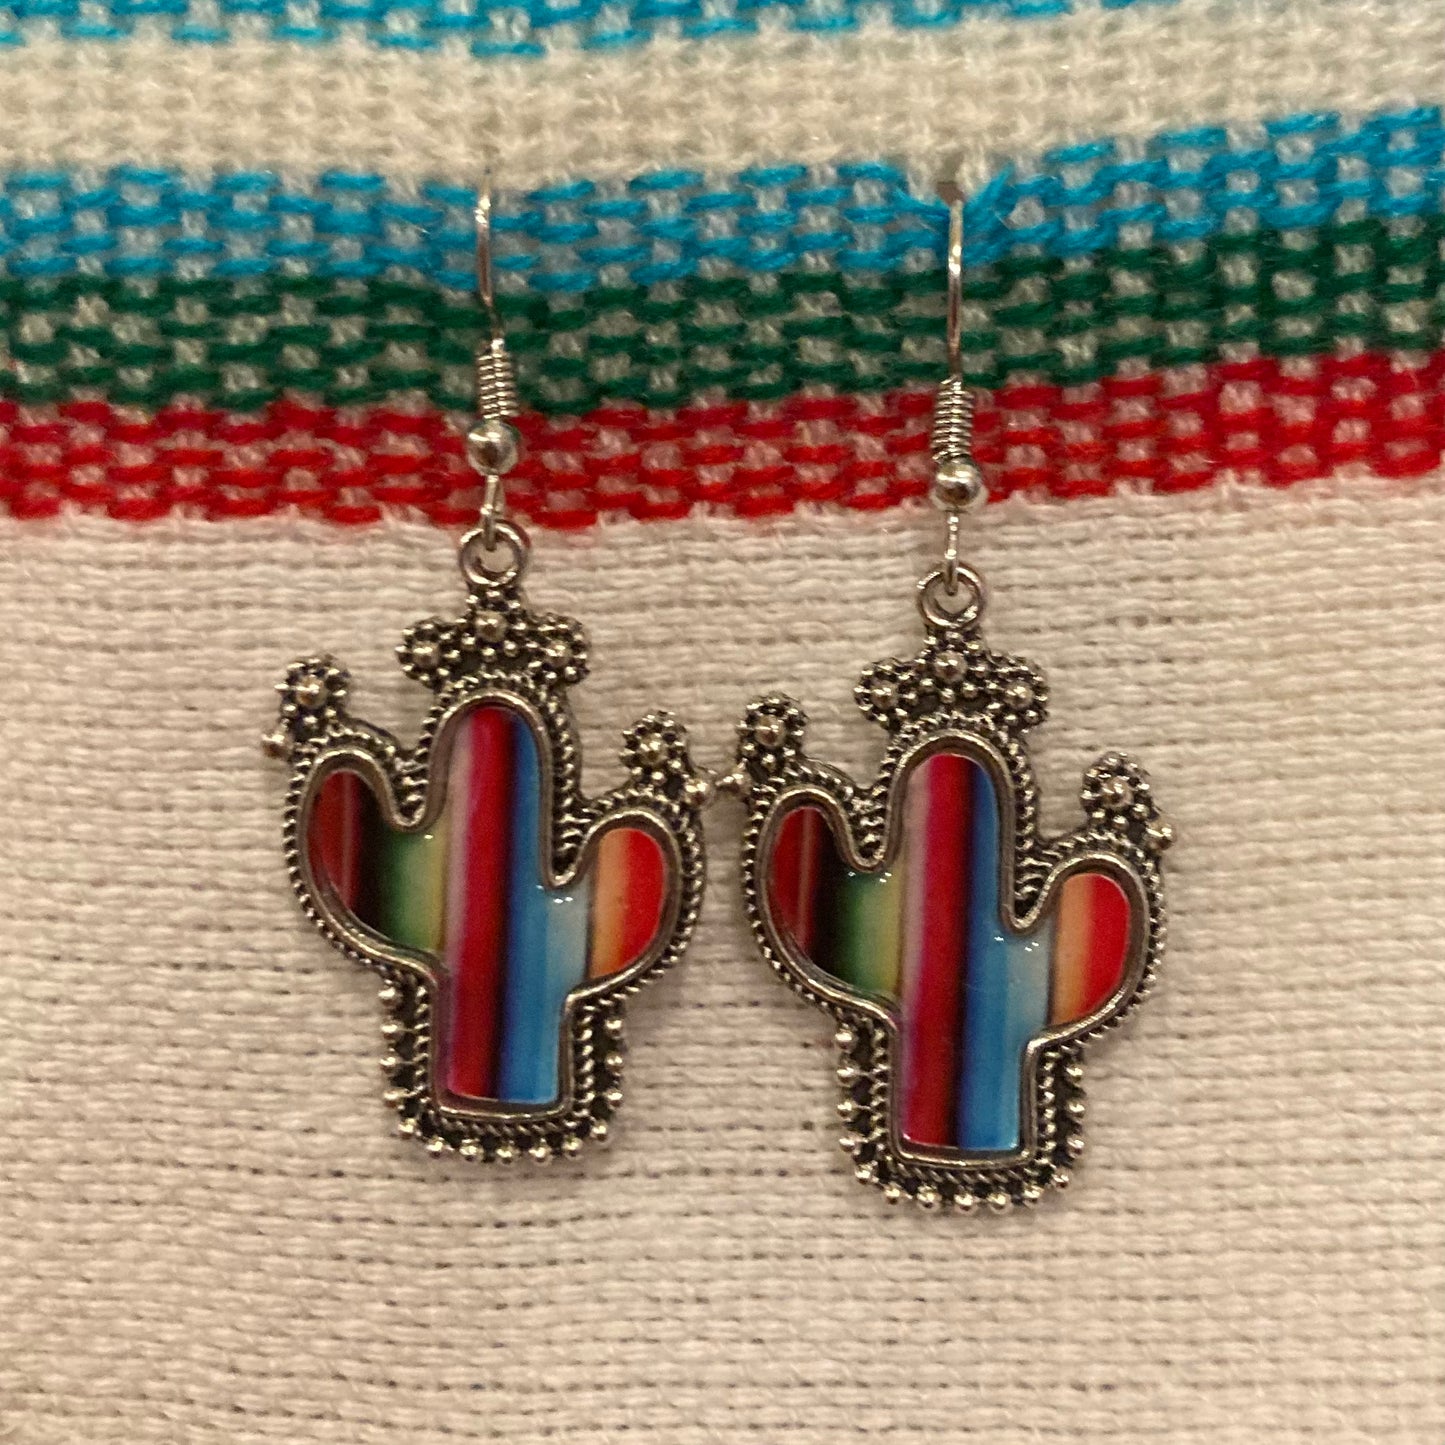 Cactus earrings serape pattern